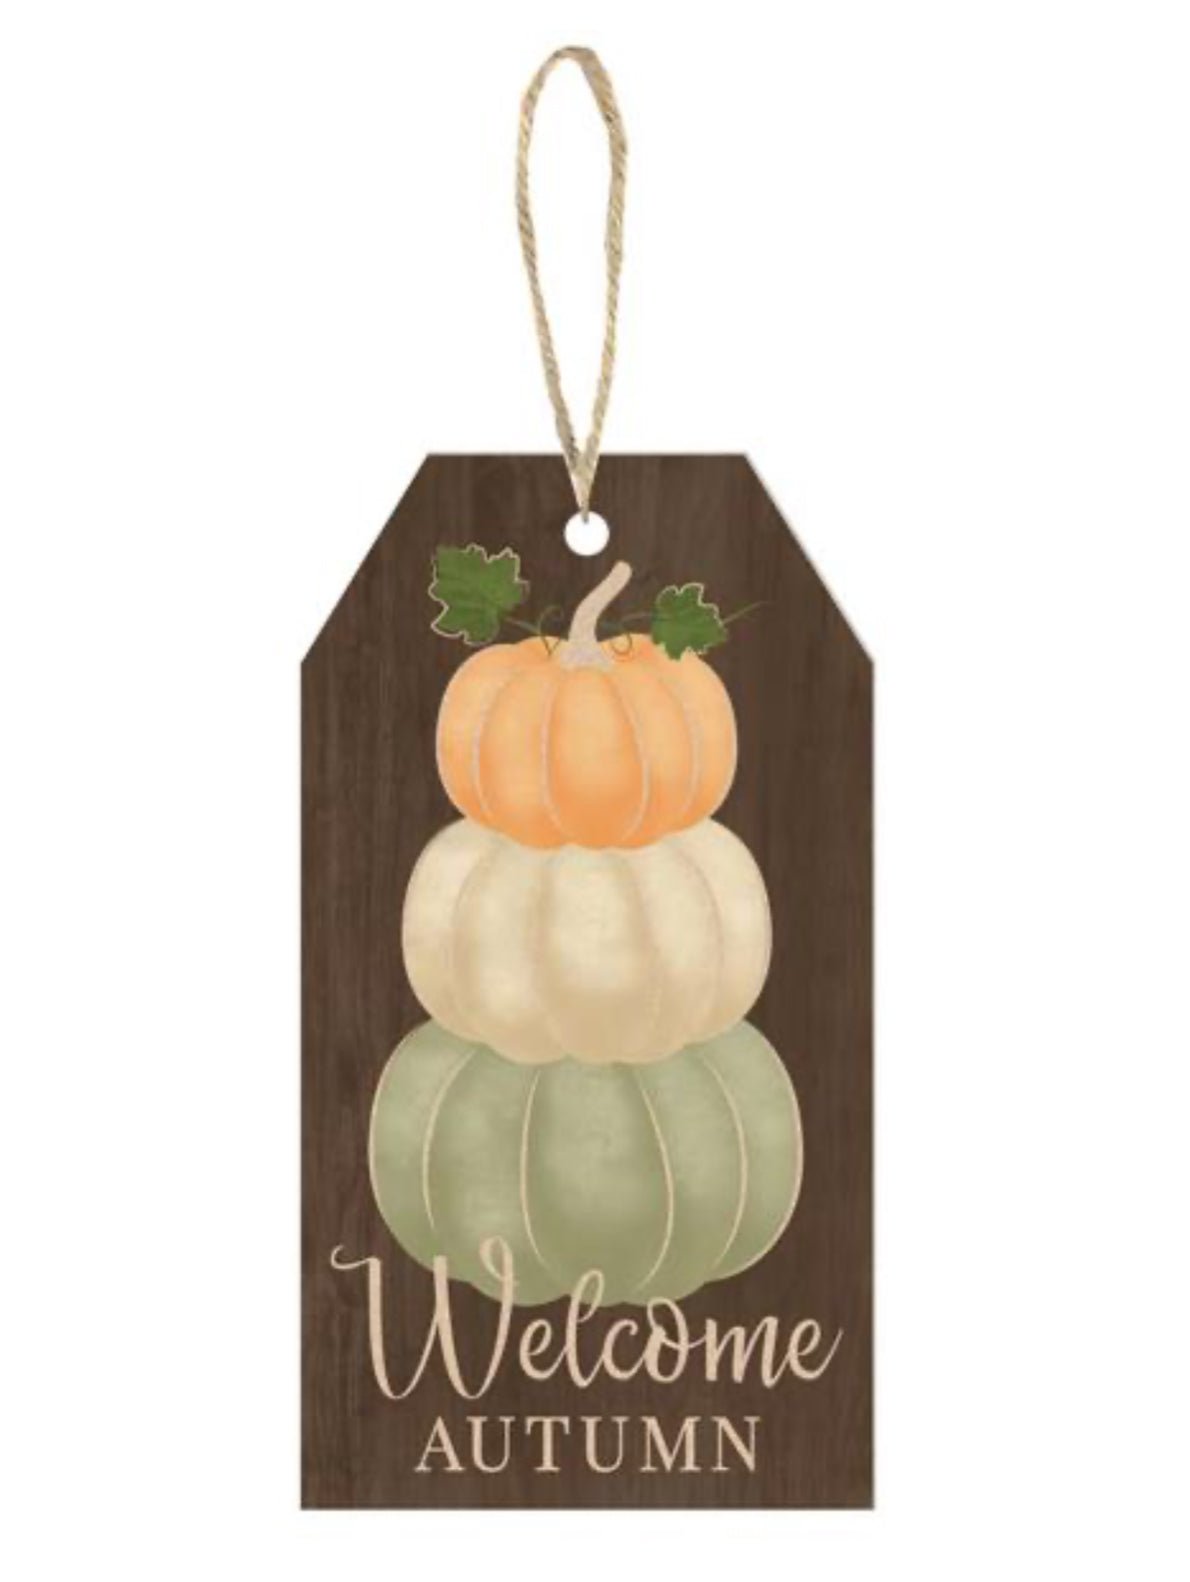 Fall pumpkin welcome sign - Greenery MarketSeasonal & Holiday DecorationsAP8833